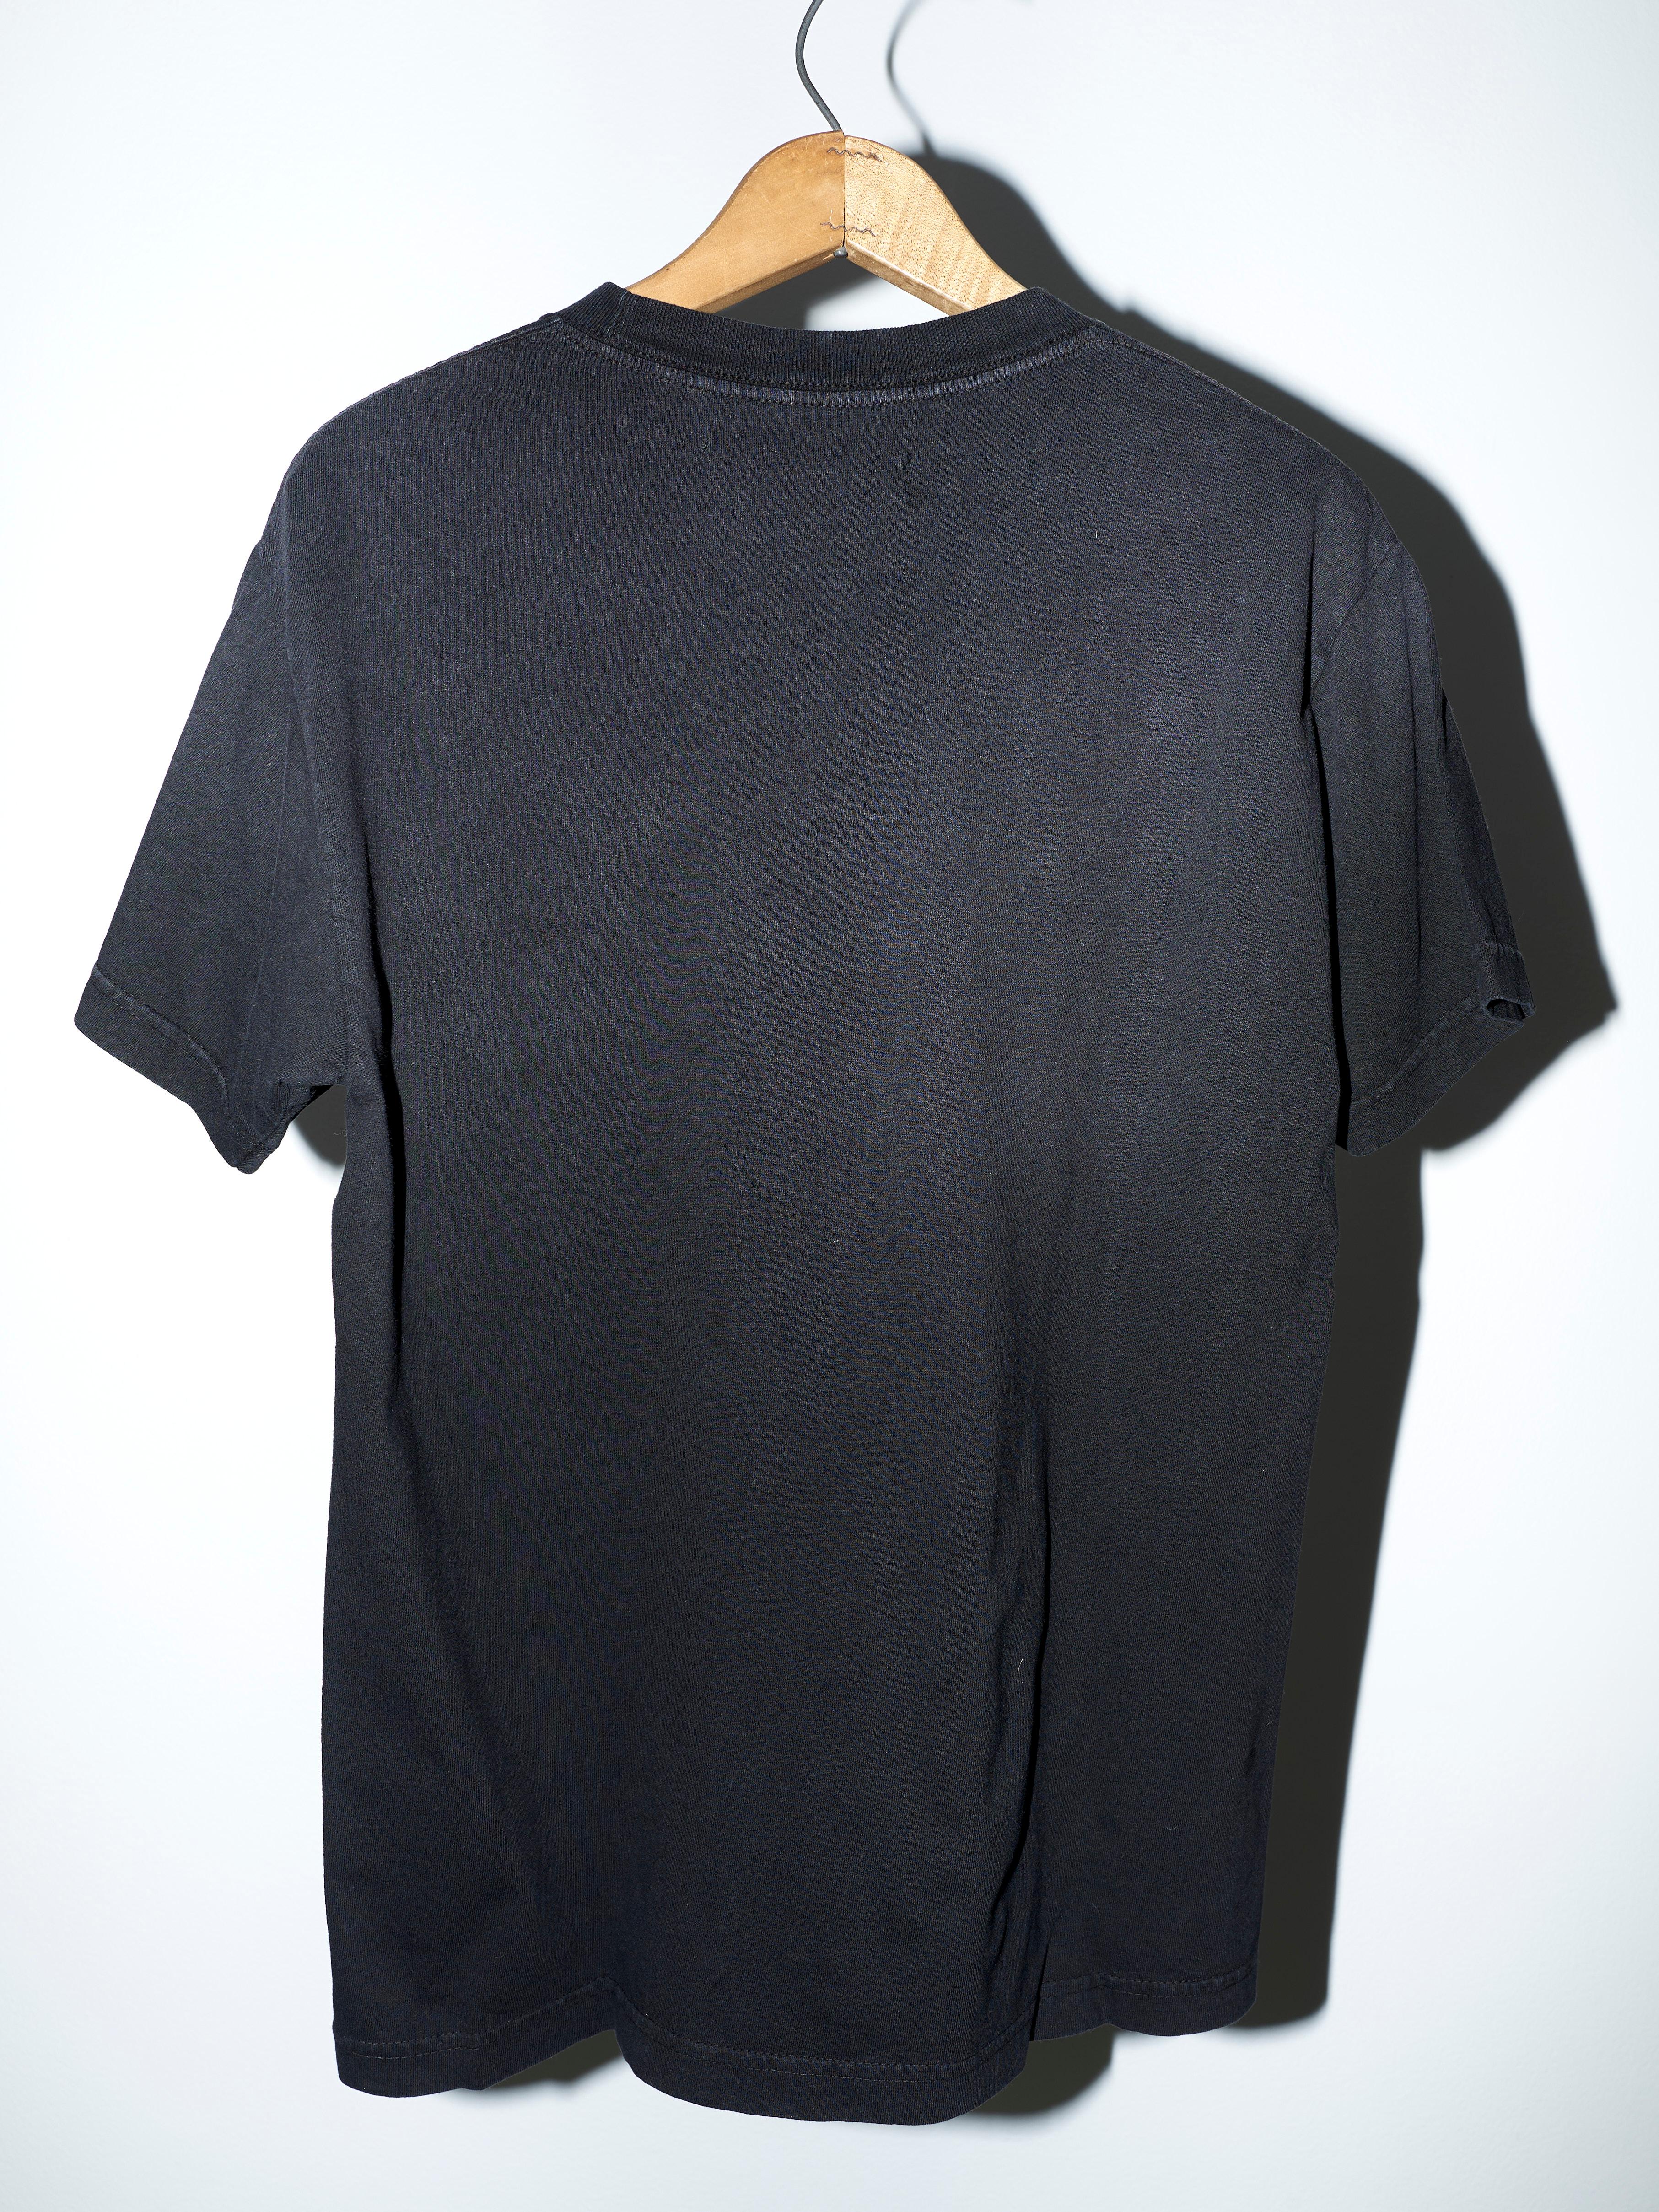 J Dauphin Black T-Shirt Embellished  Patch Work Sequin Silk Body Cotton  14